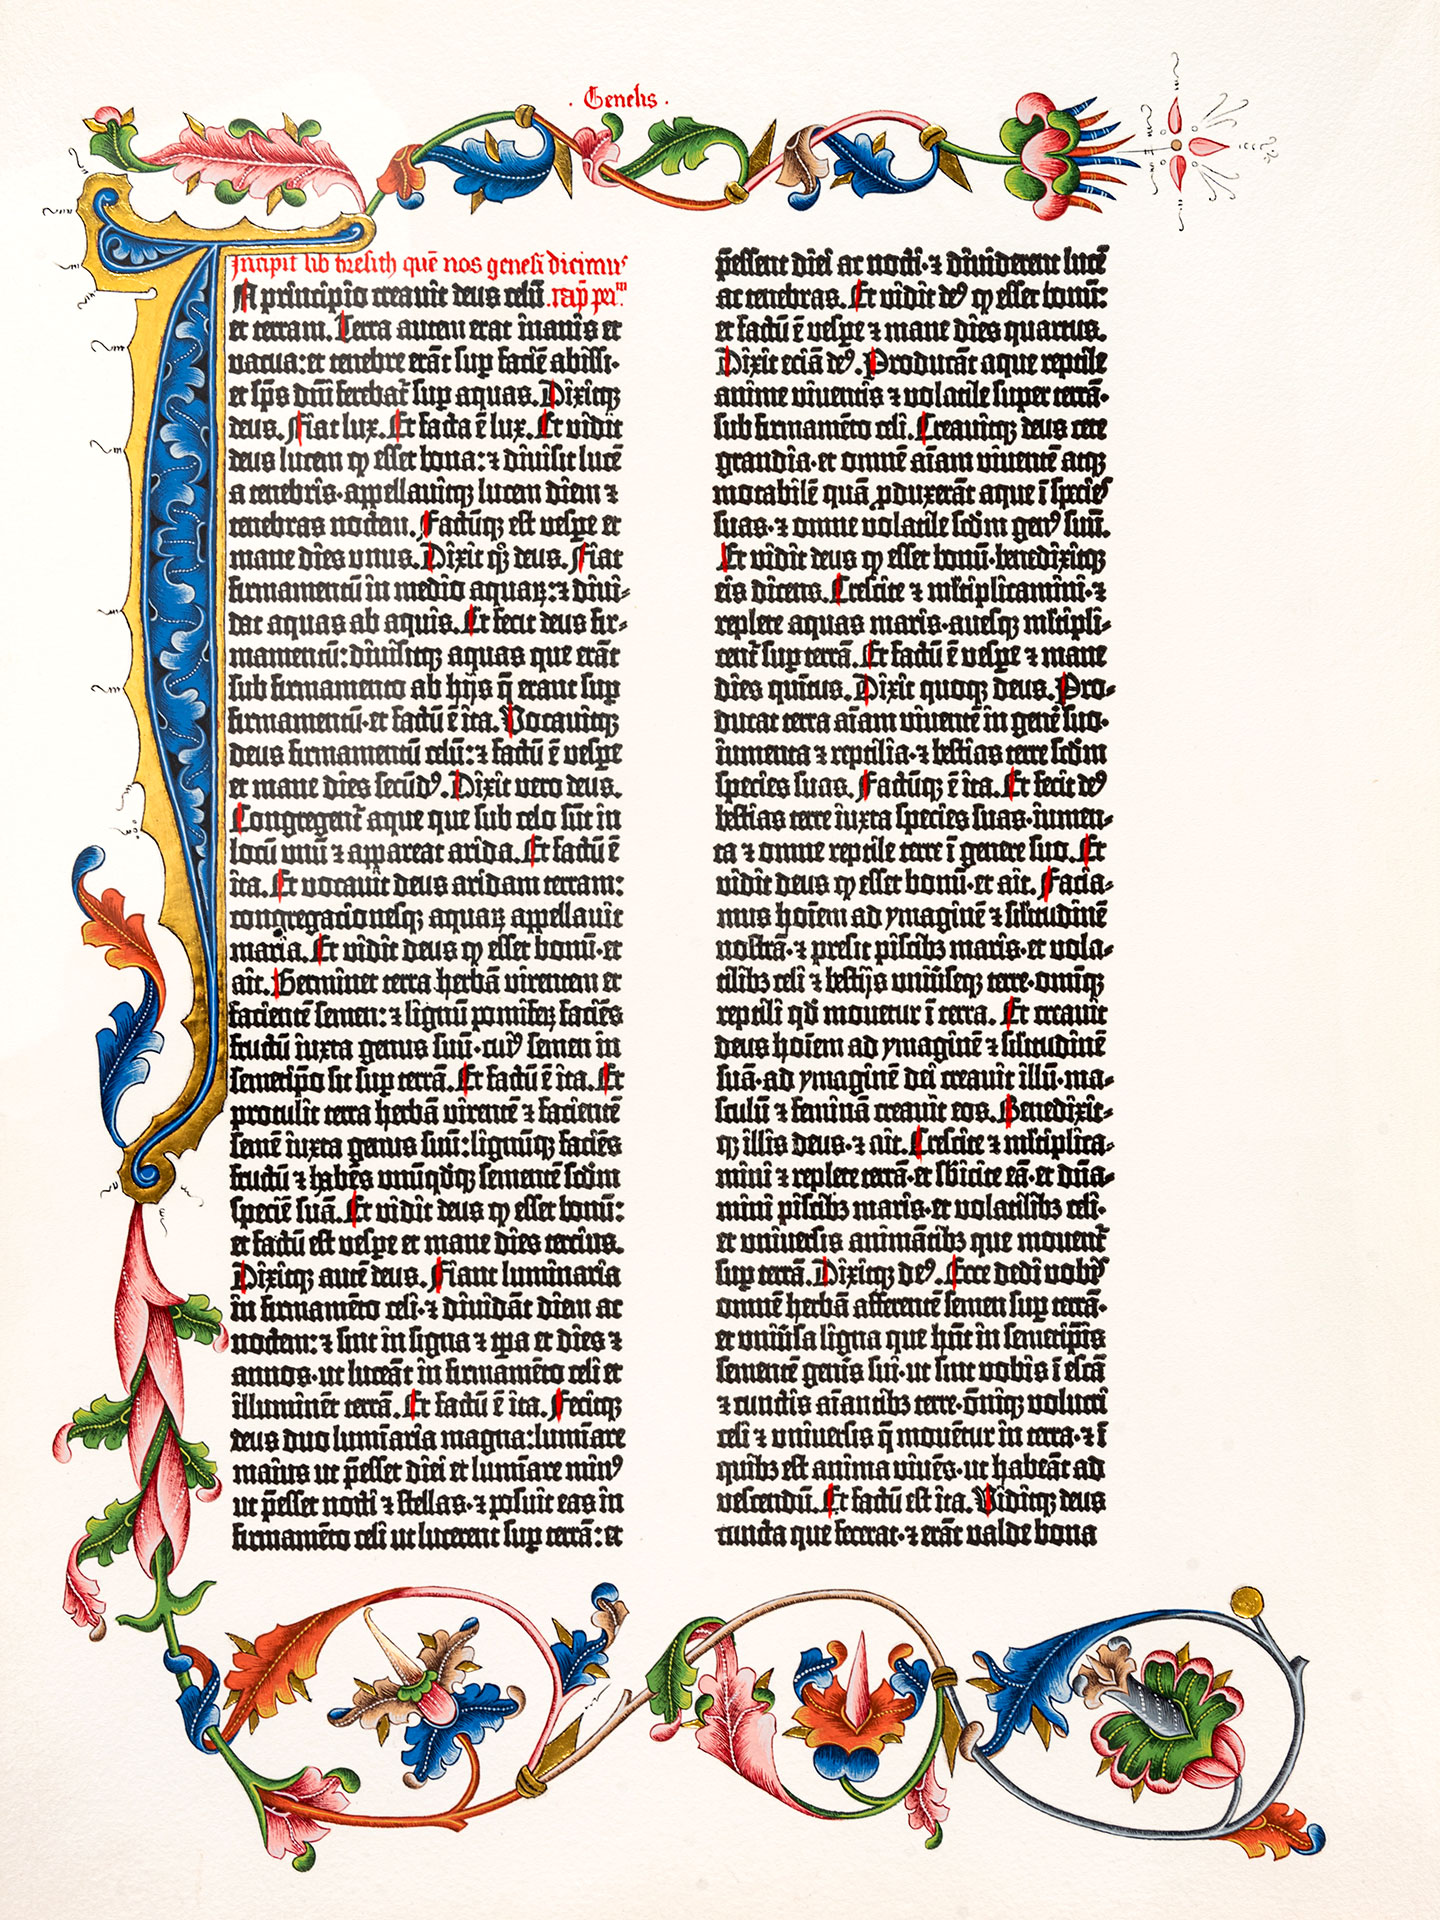 Genesis. Prachtseite Göttinger Gutenberg-Bibel